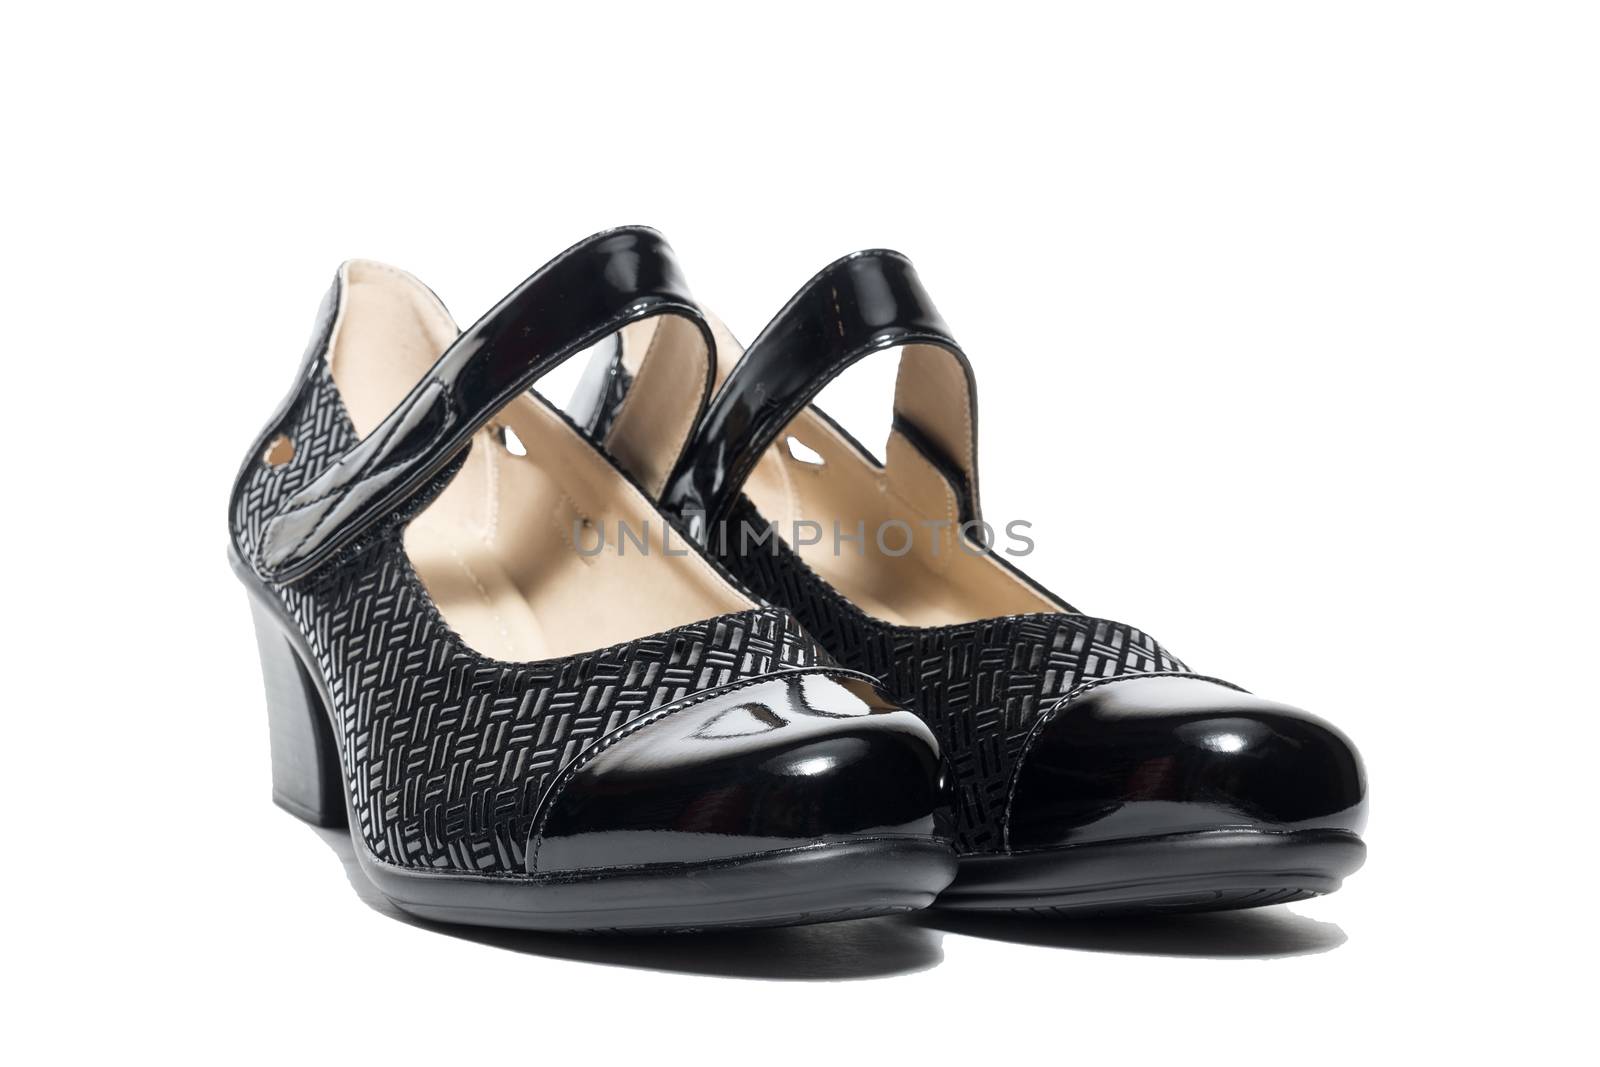 Black female shoes on a white background, isolated, studio